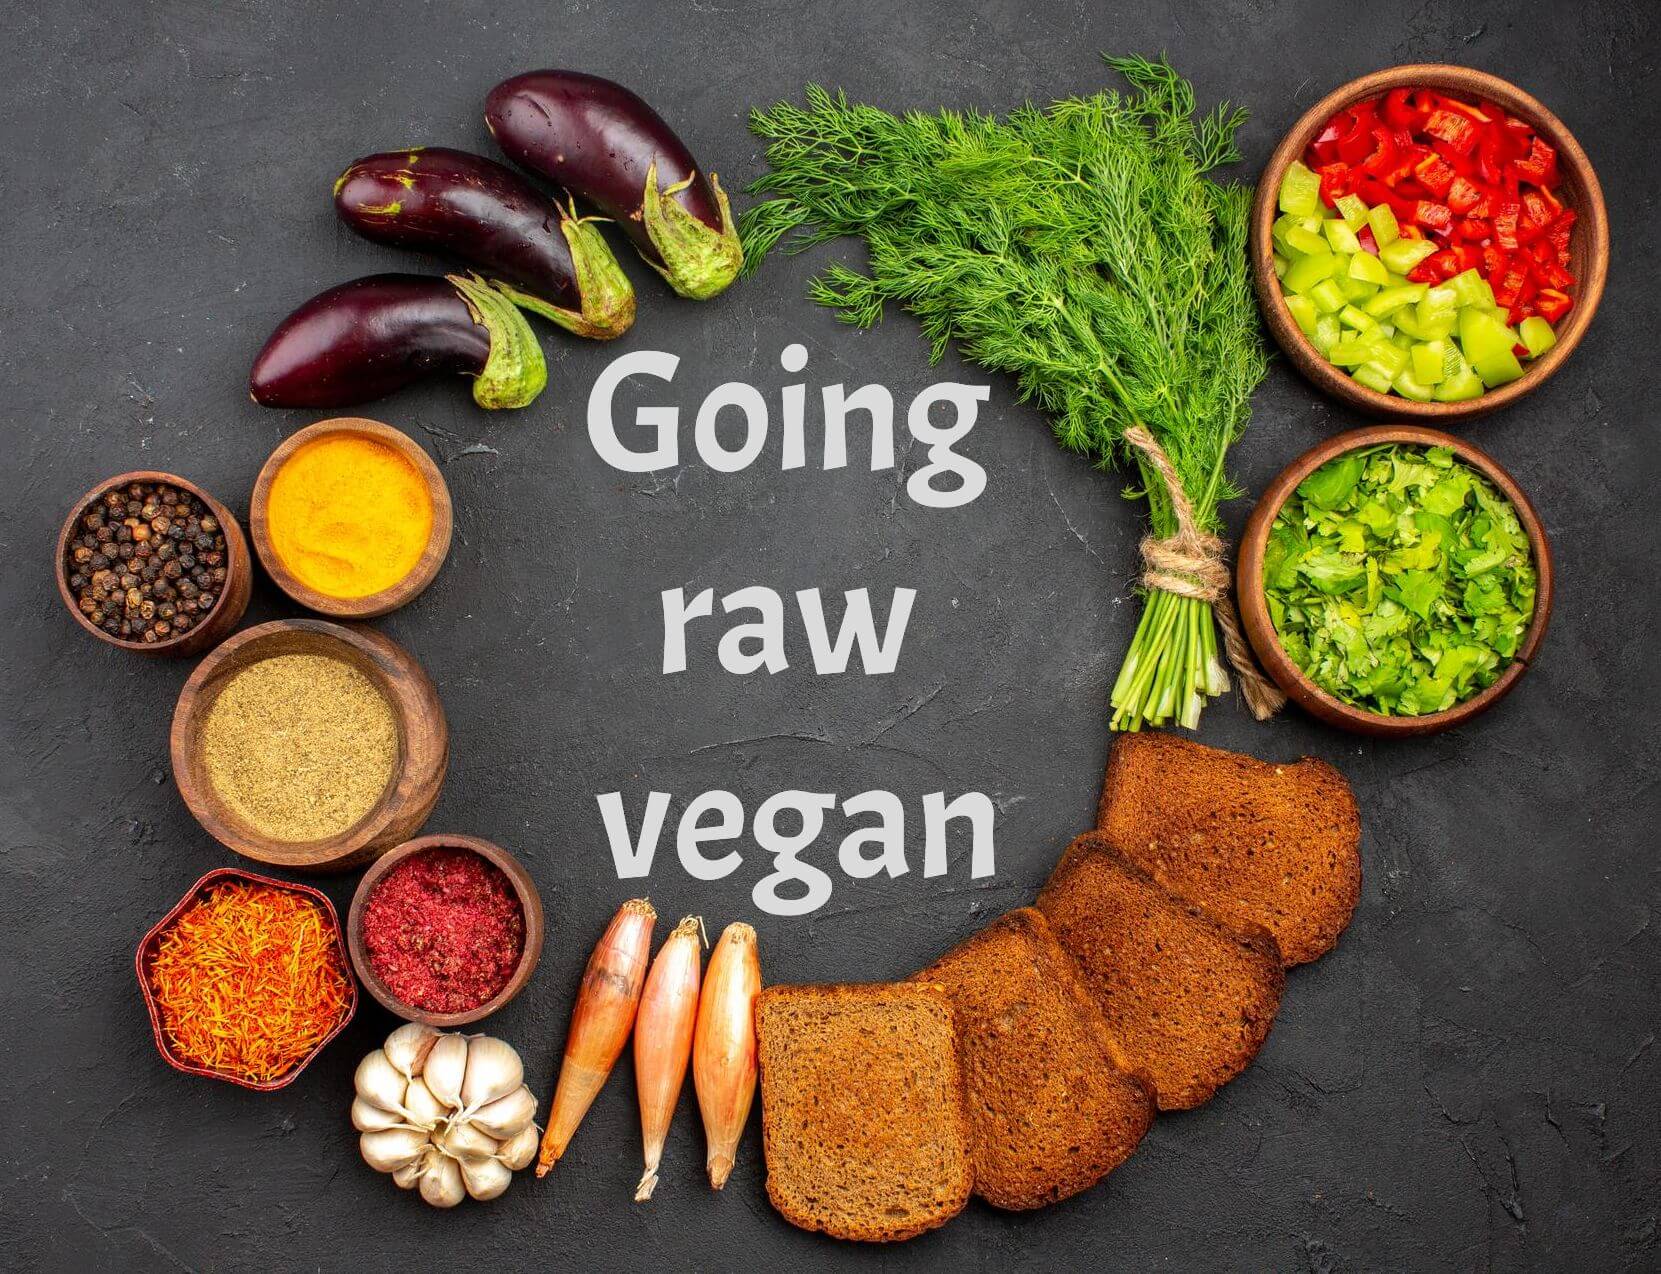 Going raw vegan